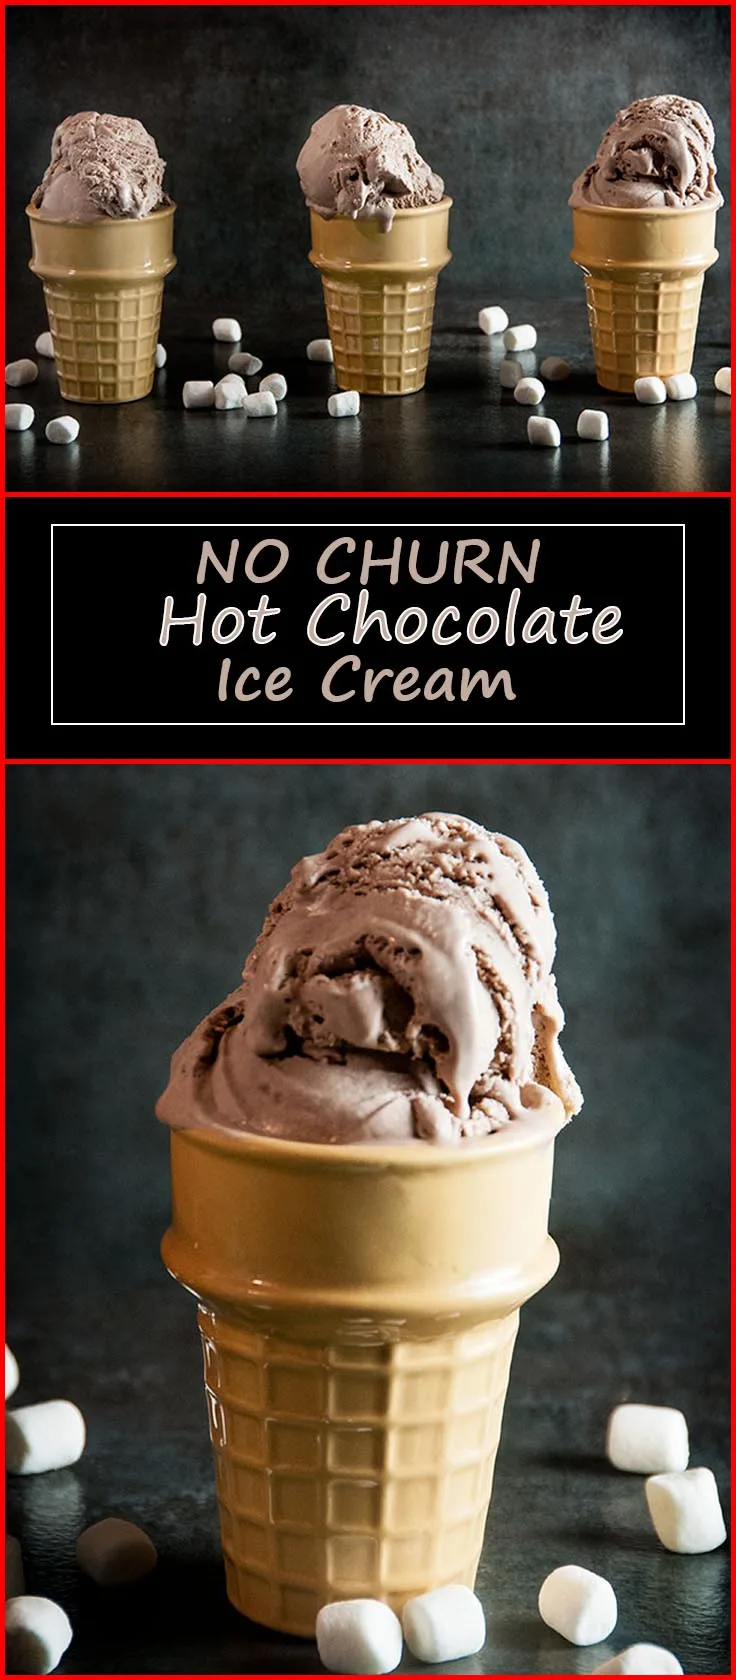 No Churn Hot Chocolate Ice Cream from www.SeasonedSprinkles.com